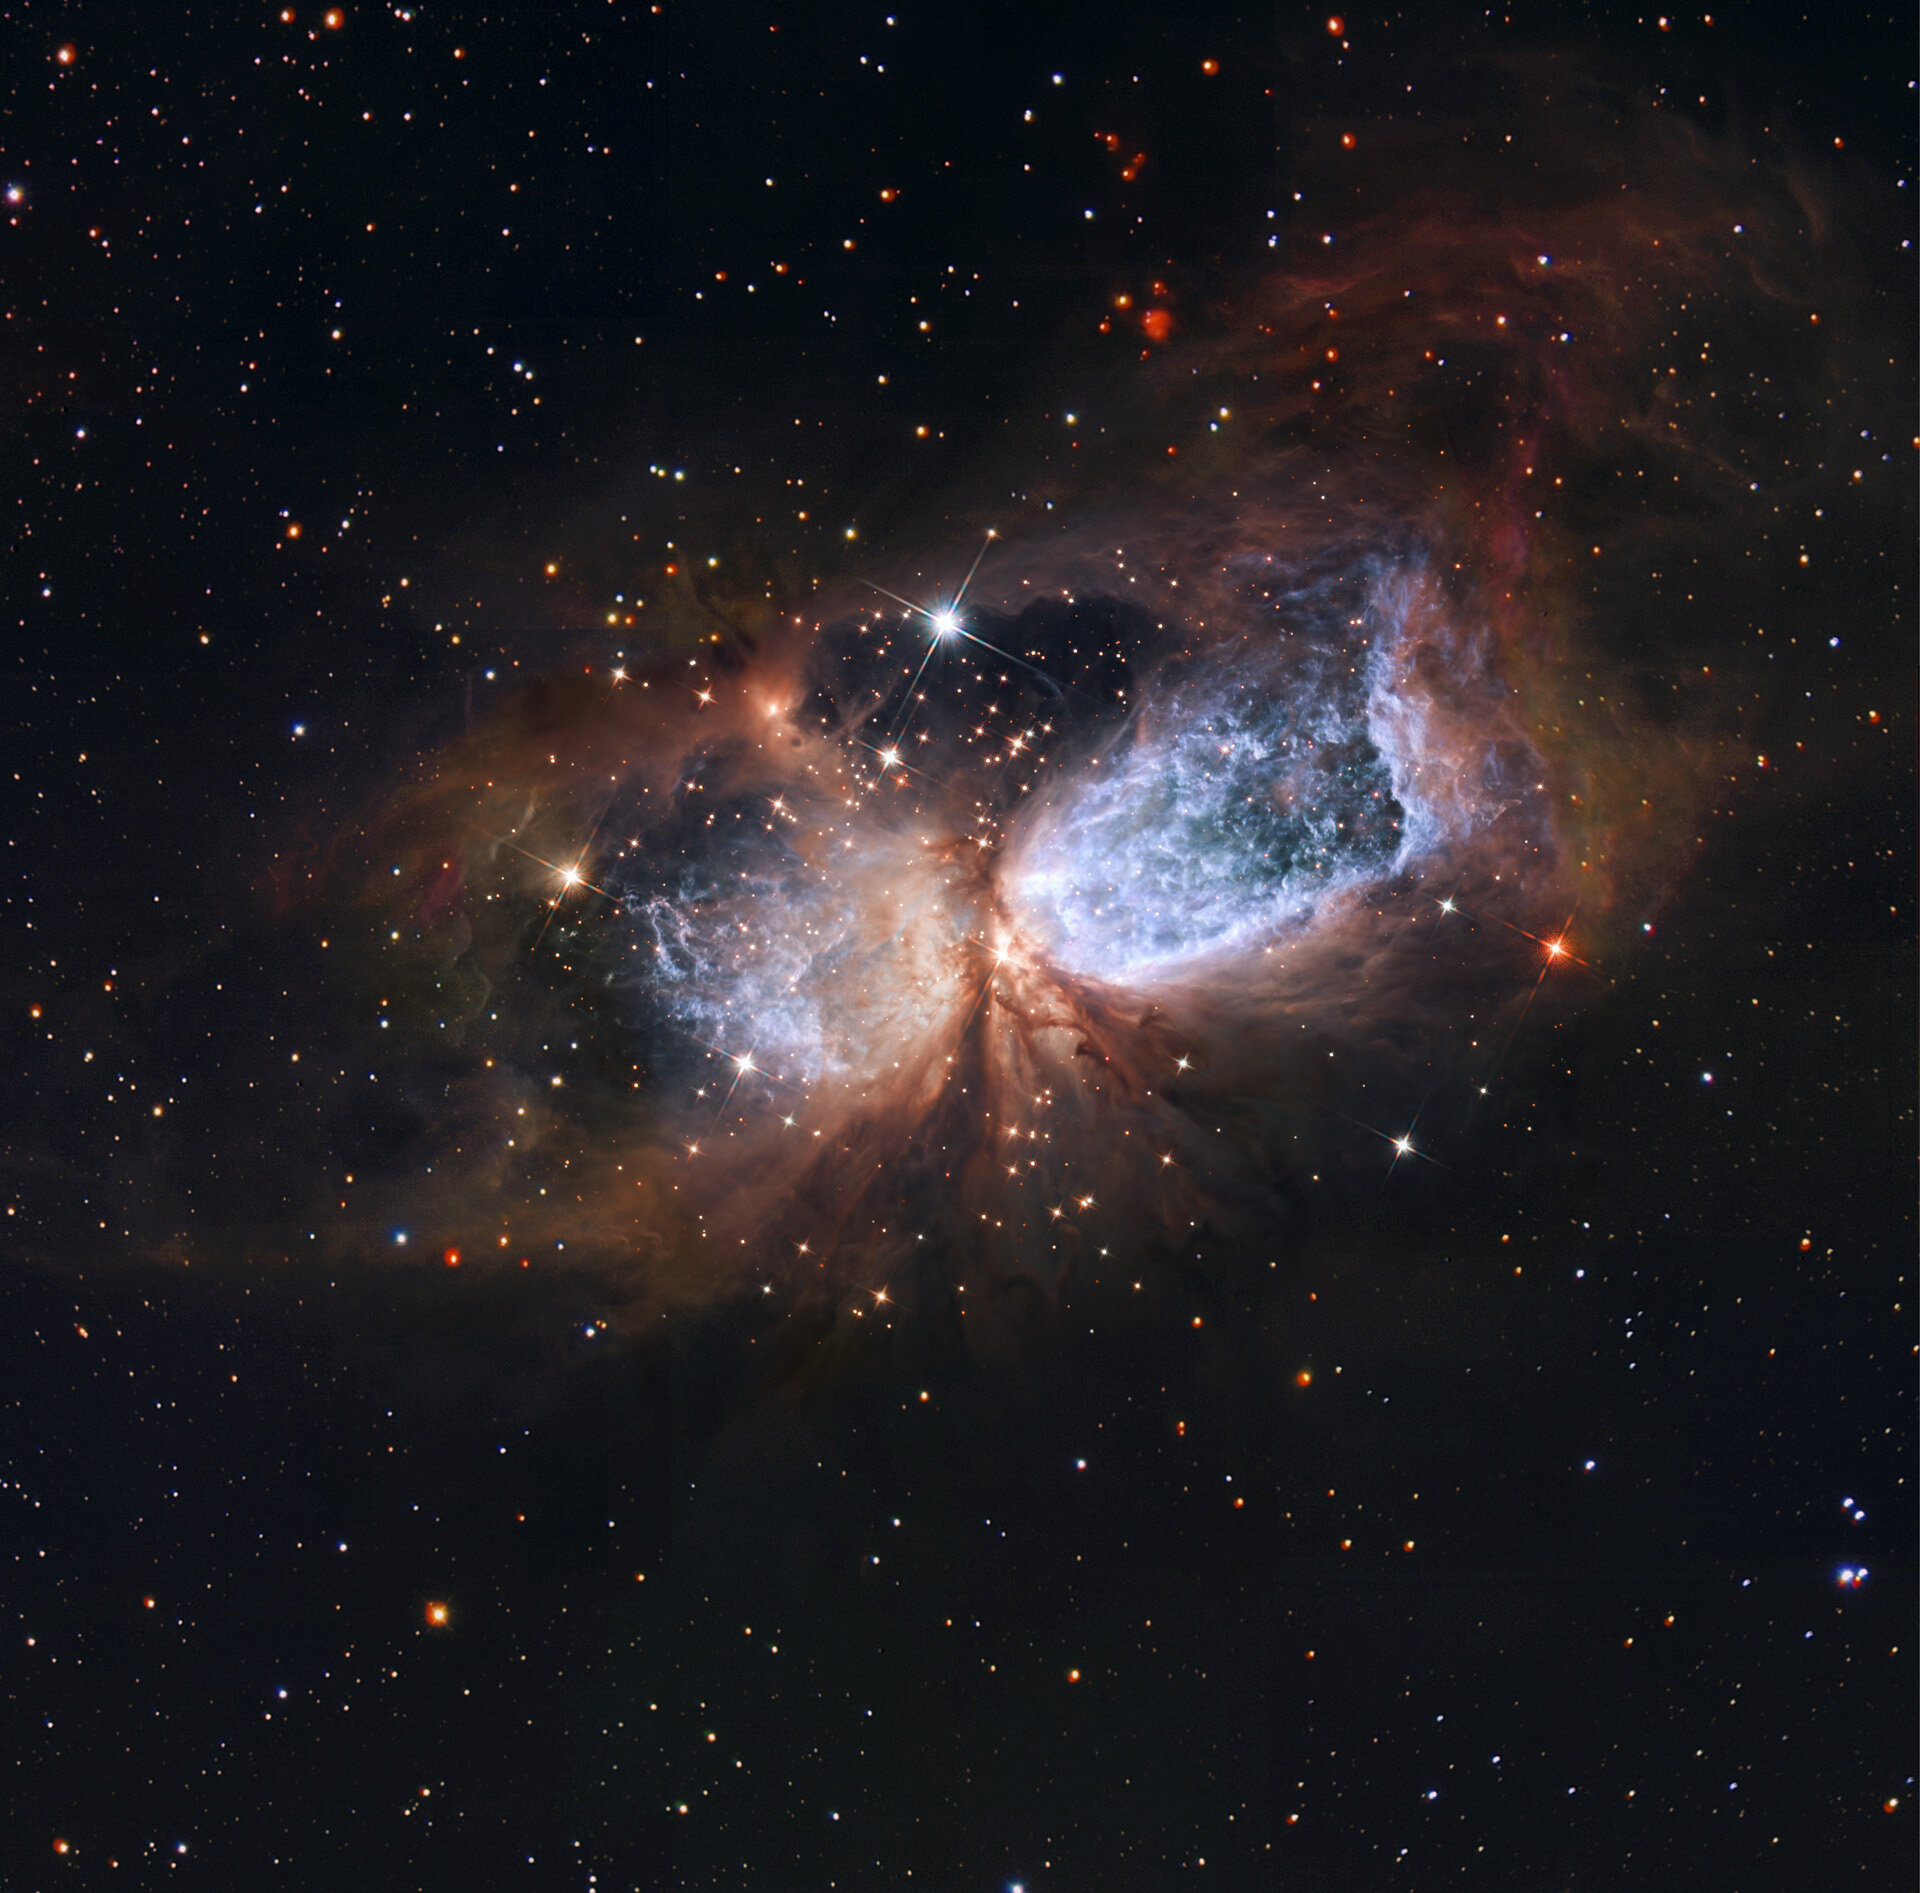 Hubble/Subaru composite of star-forming region S 106